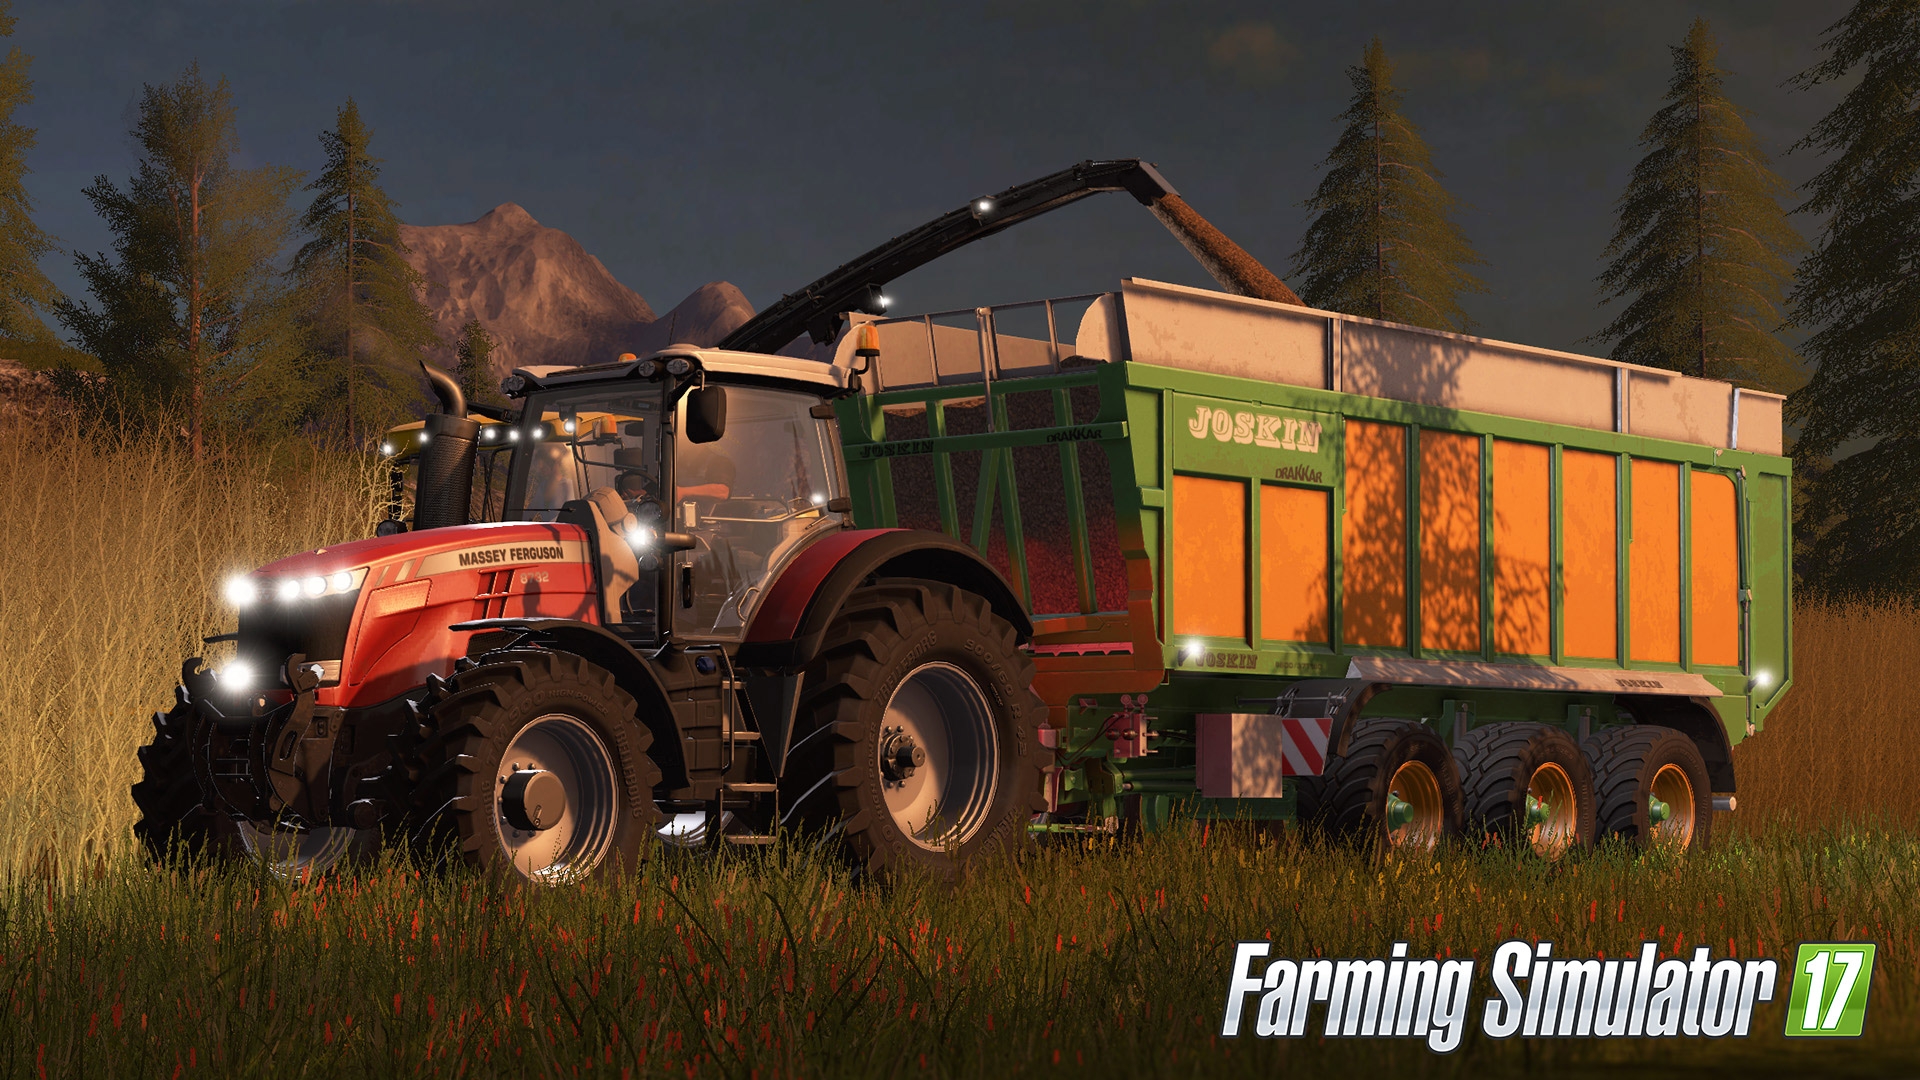 Игра симулятор farming. Ферма симулятор 22. FS-17. Фарминг симулятор 17. Farming Simulator 17ъ.